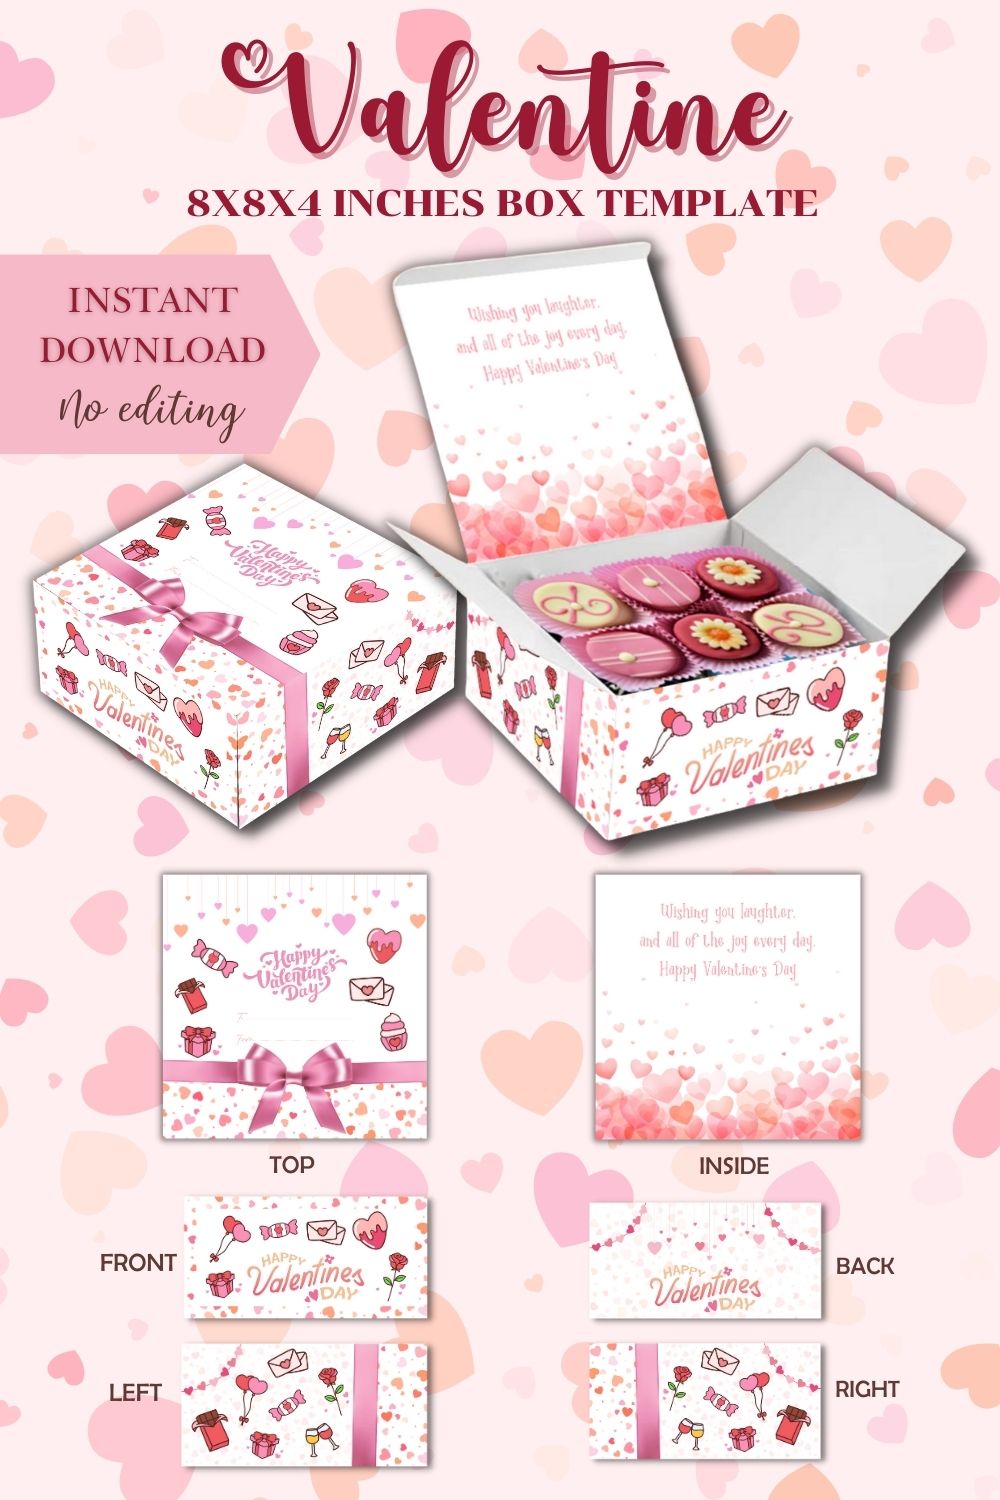 Valentine Treat Box Template pinterest image.